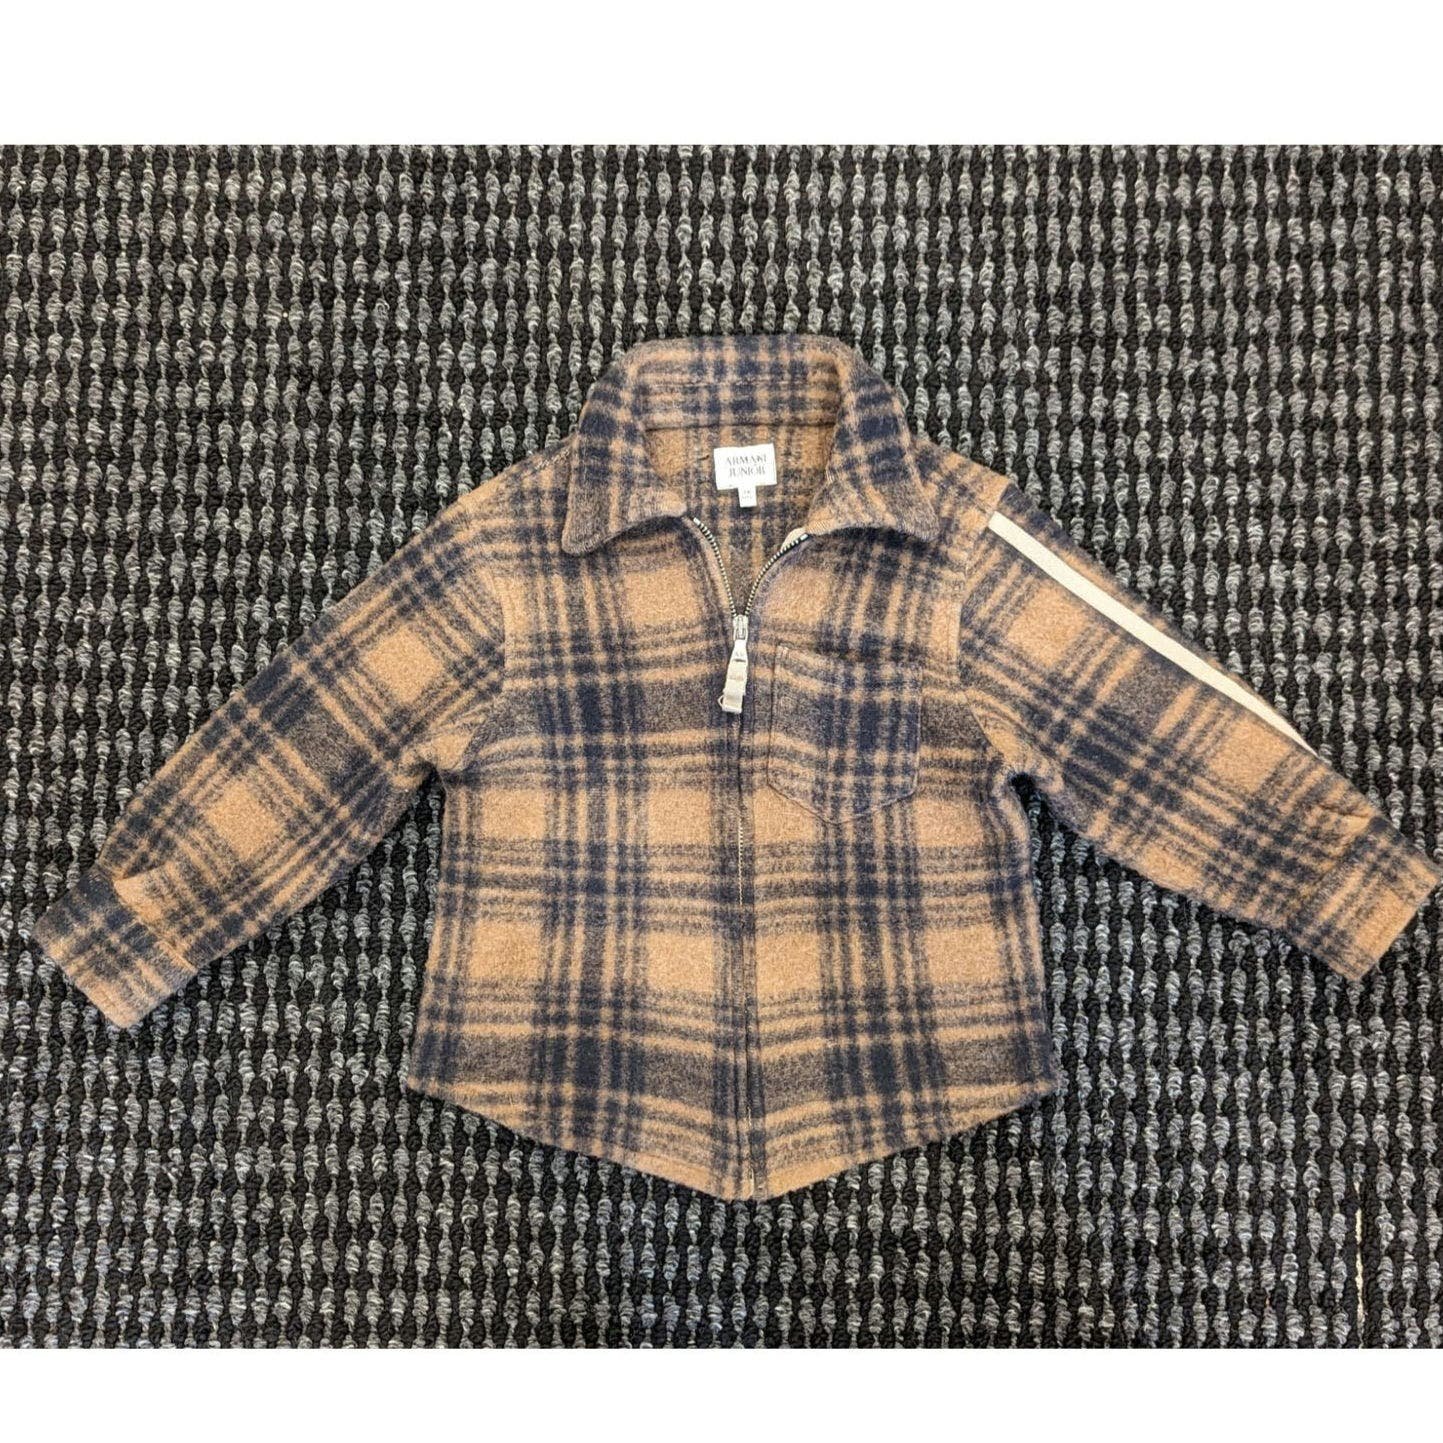 Armani Junior Flannel Jacket size 2A Toddler FRc7ymmkf